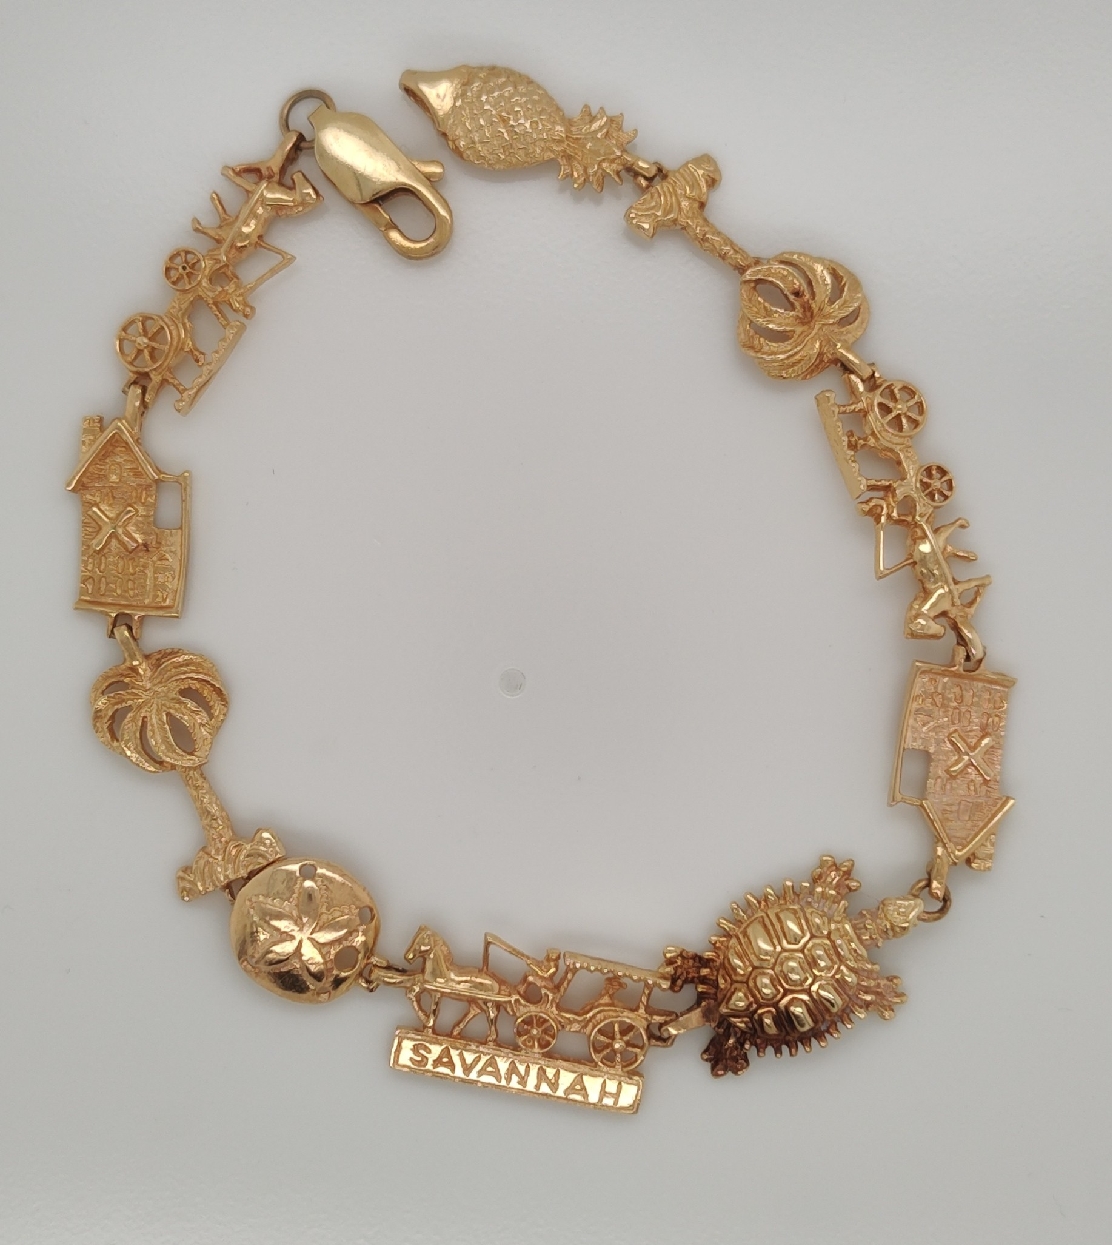 14K Yellow Gold Savannah Themed Charm Bracelet 8 Inches